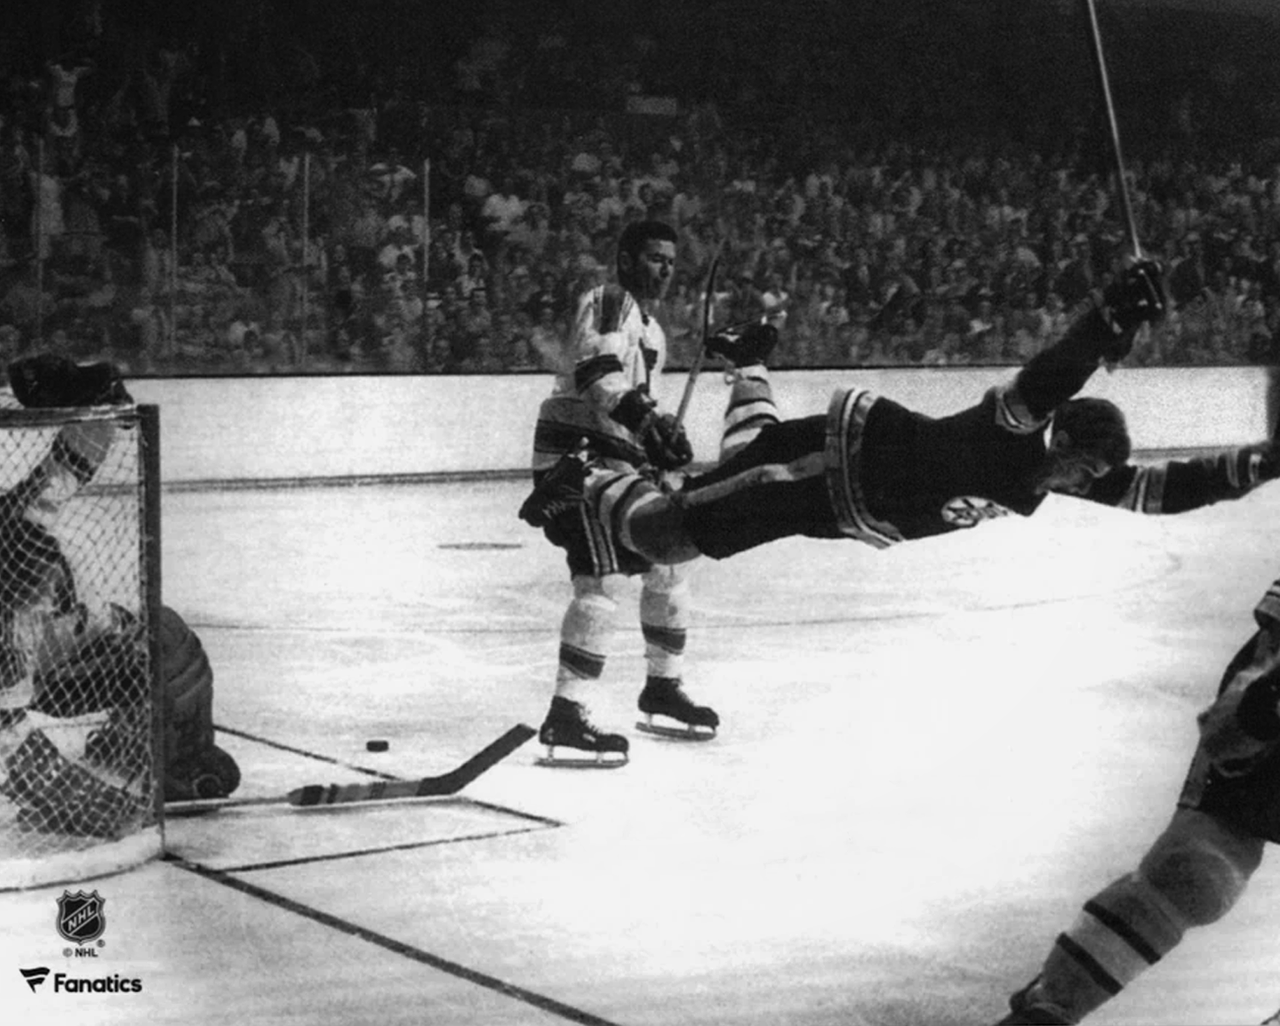 Mitchell & Ness Blue Line Bobby Orr Boston Bruins 1971 Jersey